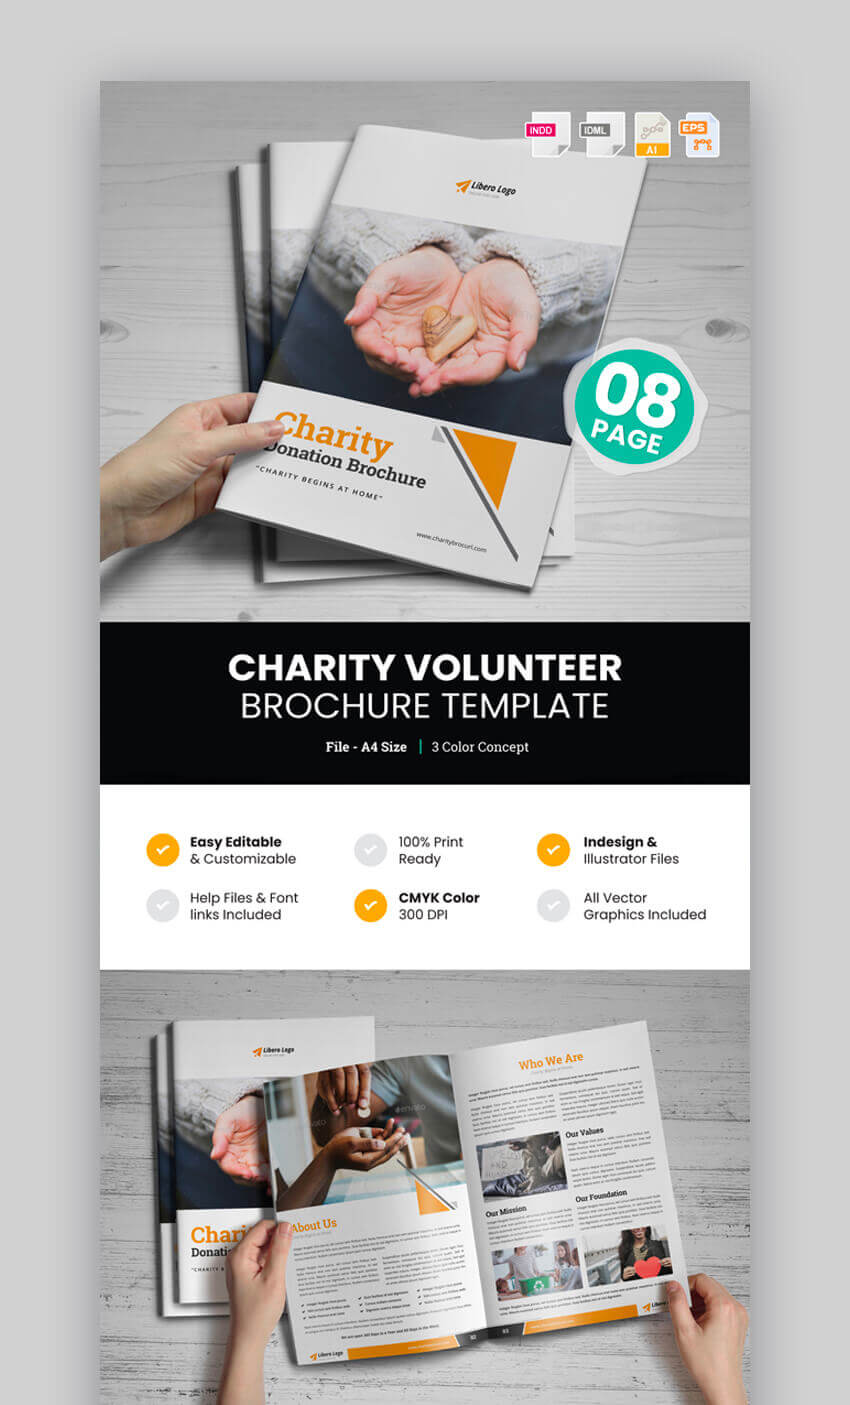 20 Best Professional Business Brochure Design Templates For 2019 Within Volunteer Brochure Template